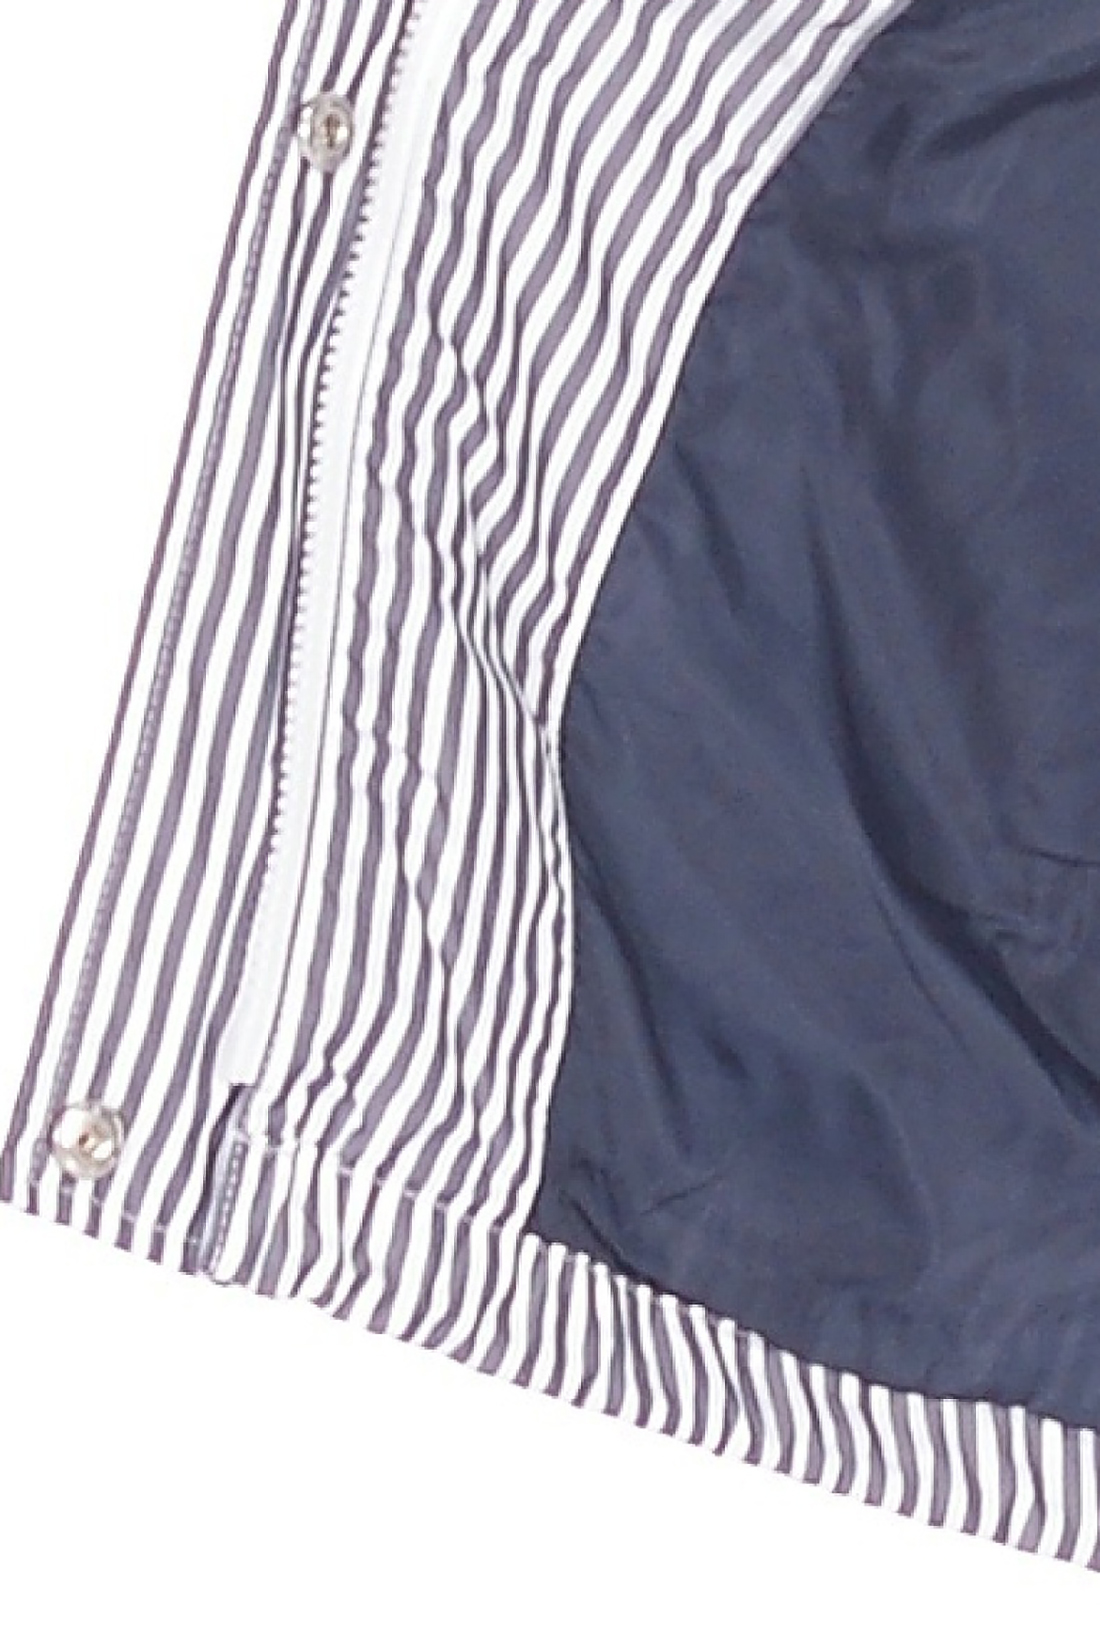 Ветровка в полоску (арт. baon B108008), размер L, цвет dark navy striped#синий Ветровка в полоску (арт. baon B108008) - фото 4